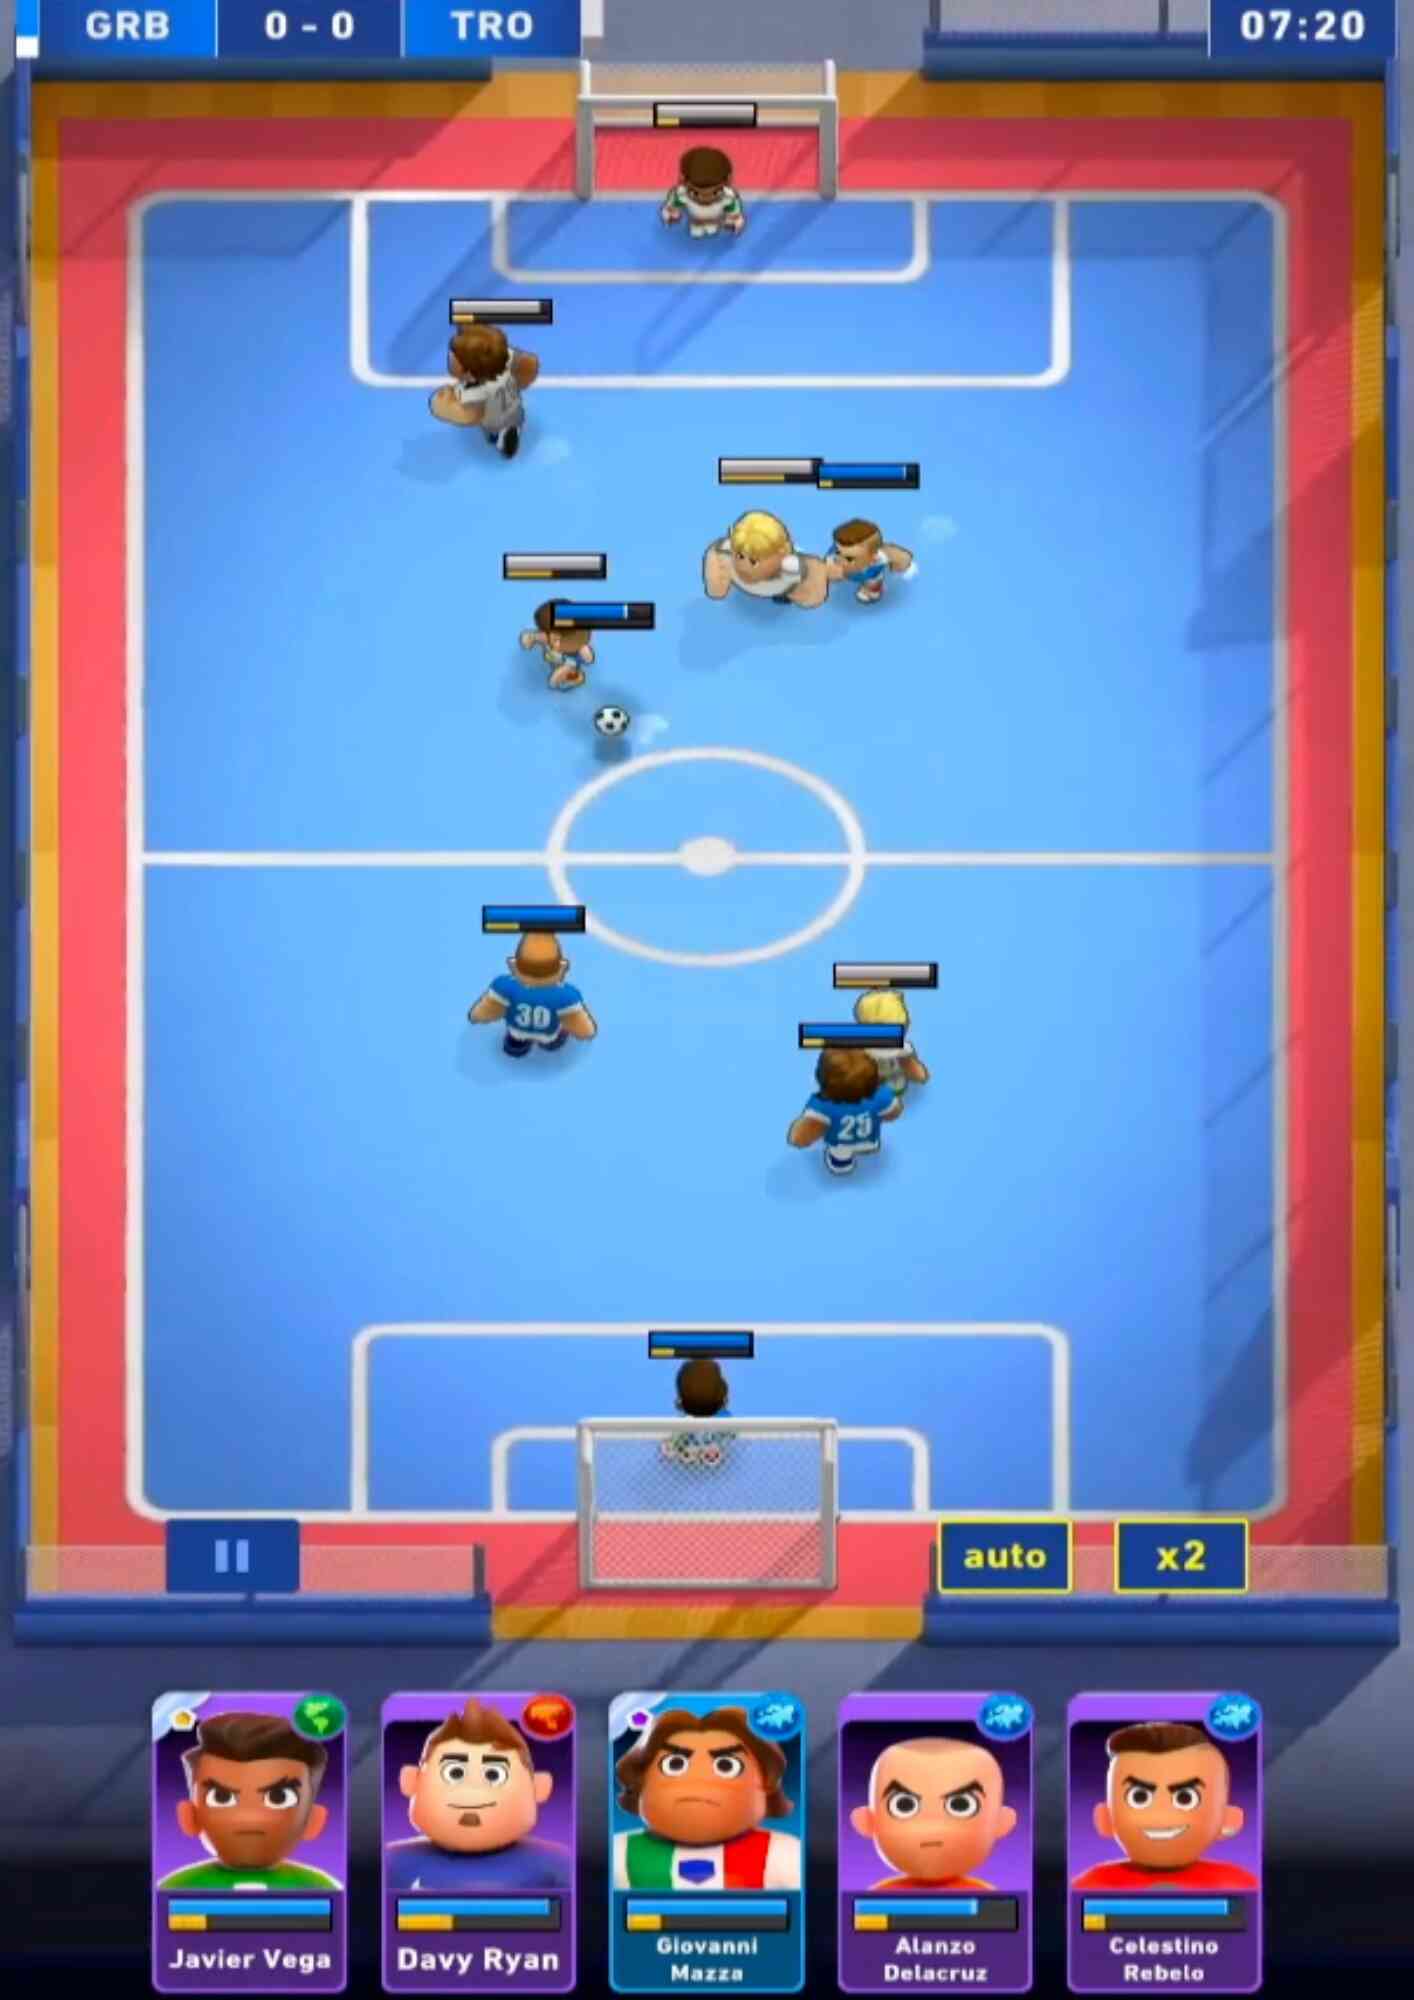 Supernova Football Gameplay Android 